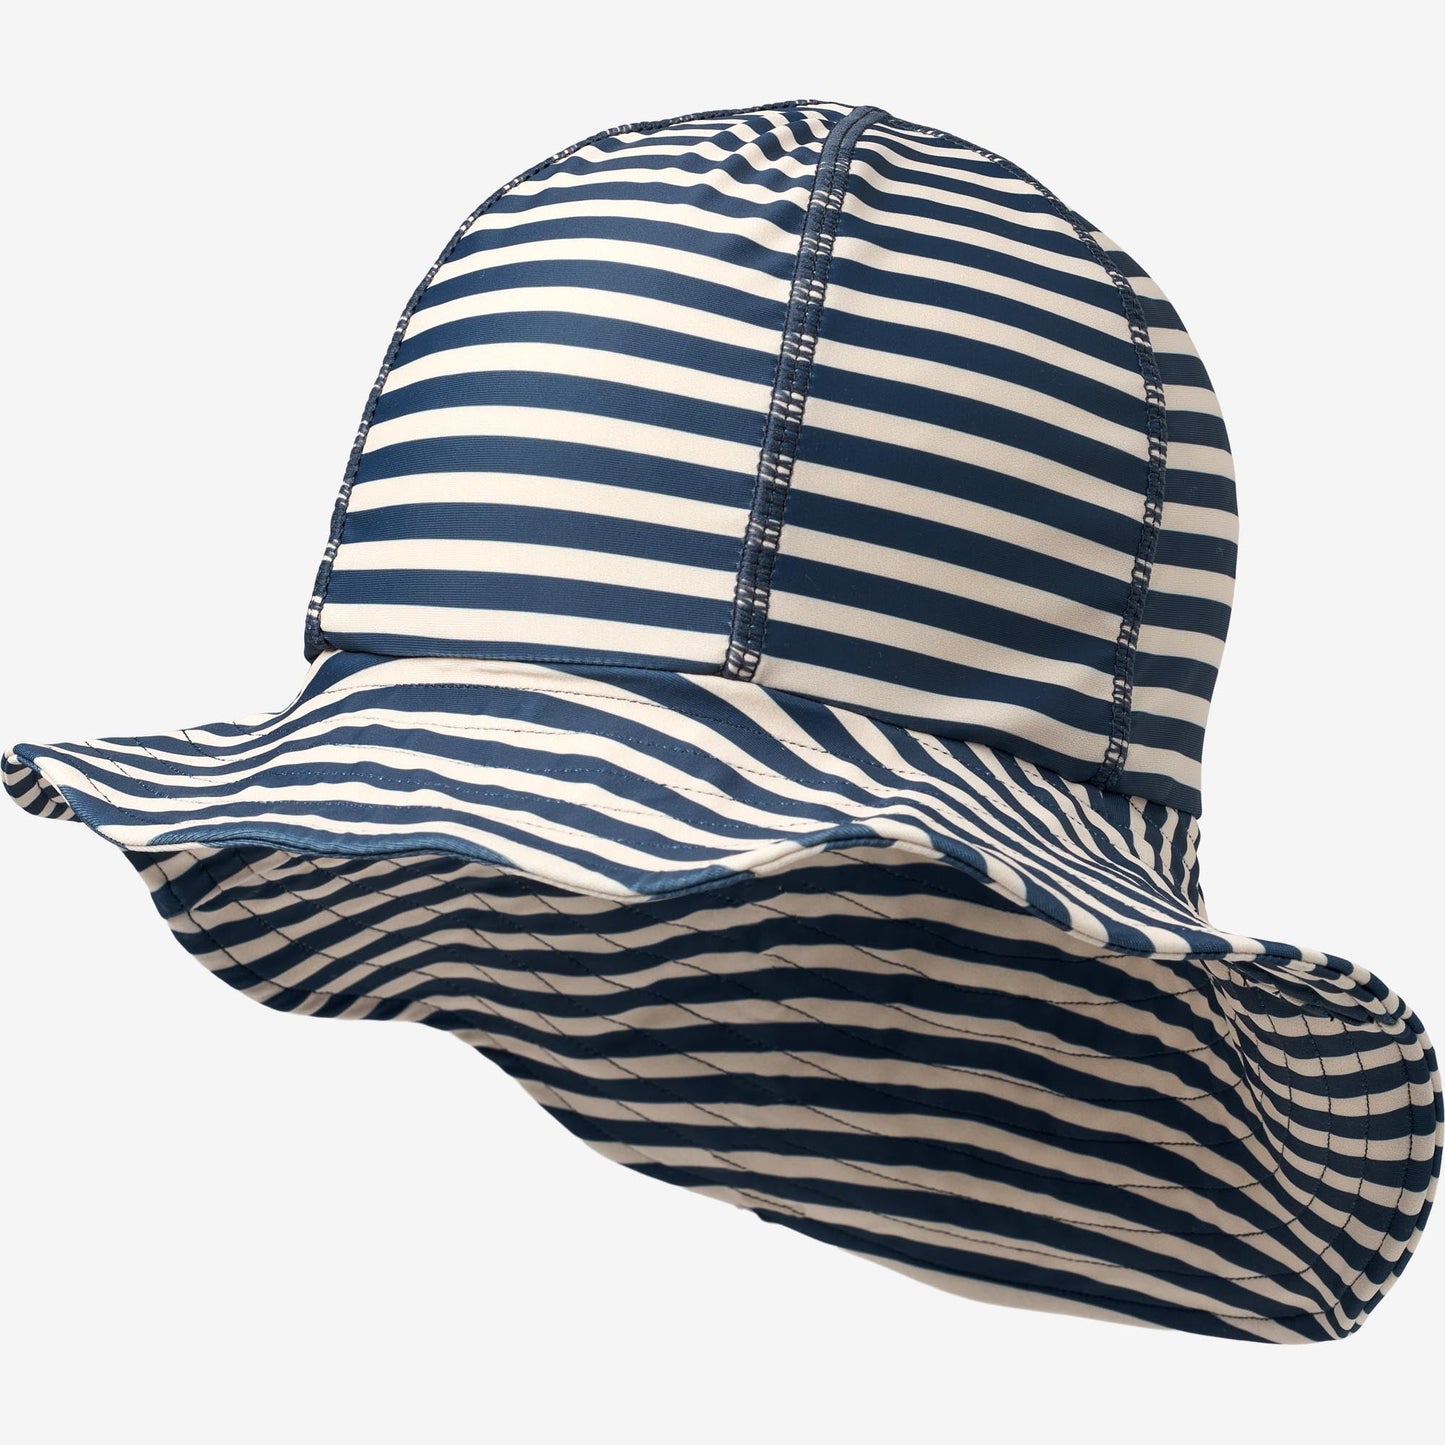 Wheat Children's UV Sun Hat - Indigo Stripe